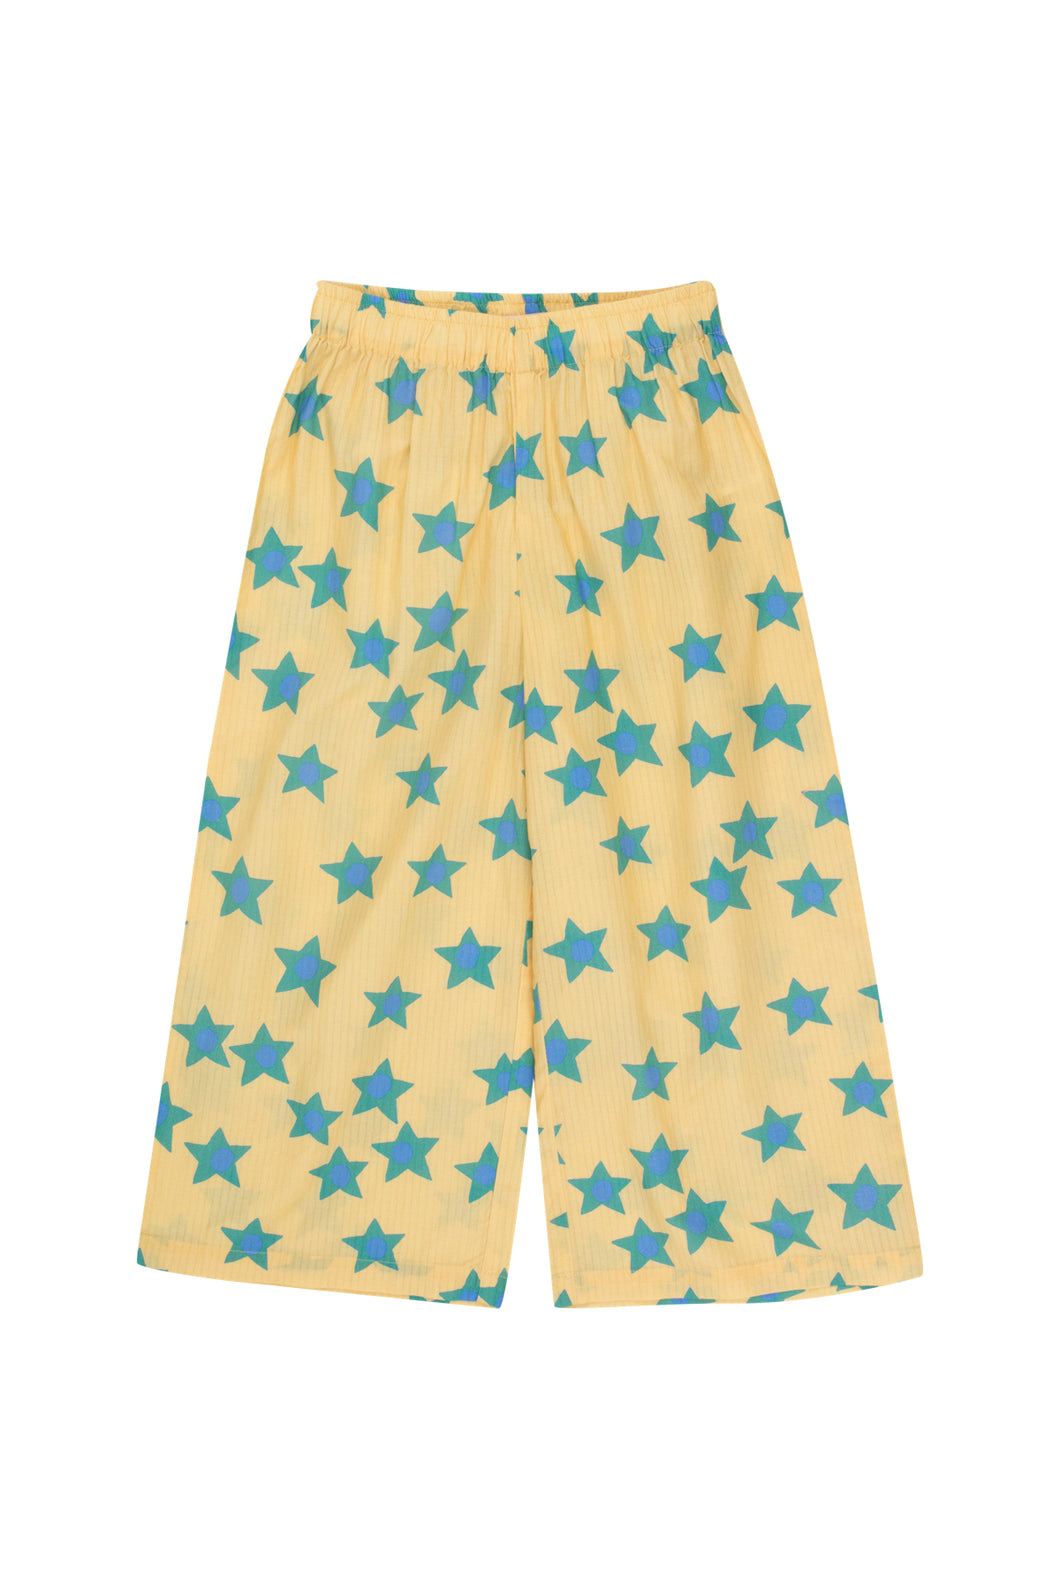 Starflowers Pants